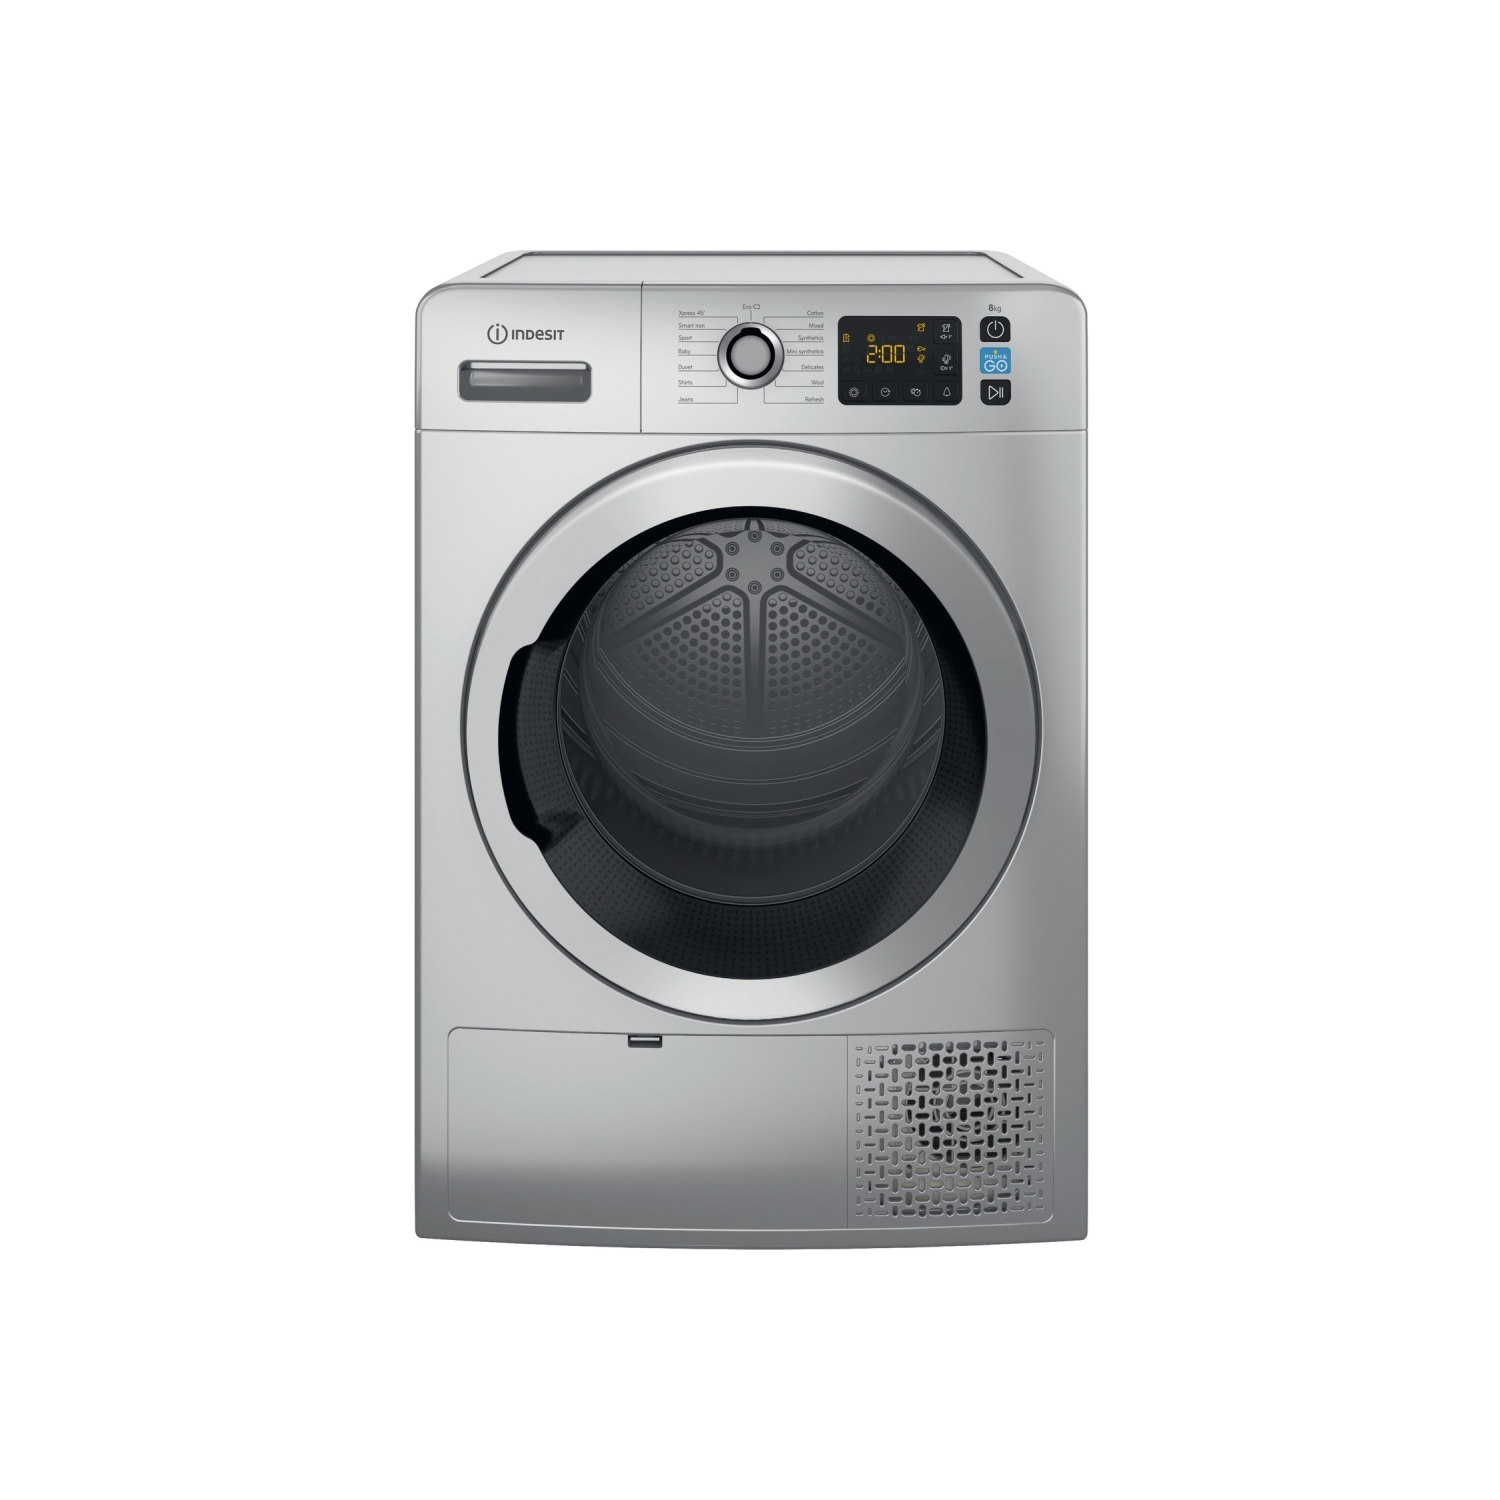 Photos - Tumble Dryer Indesit Push&Go 8kg Heat Pump Dryer - Silver 869991667940 